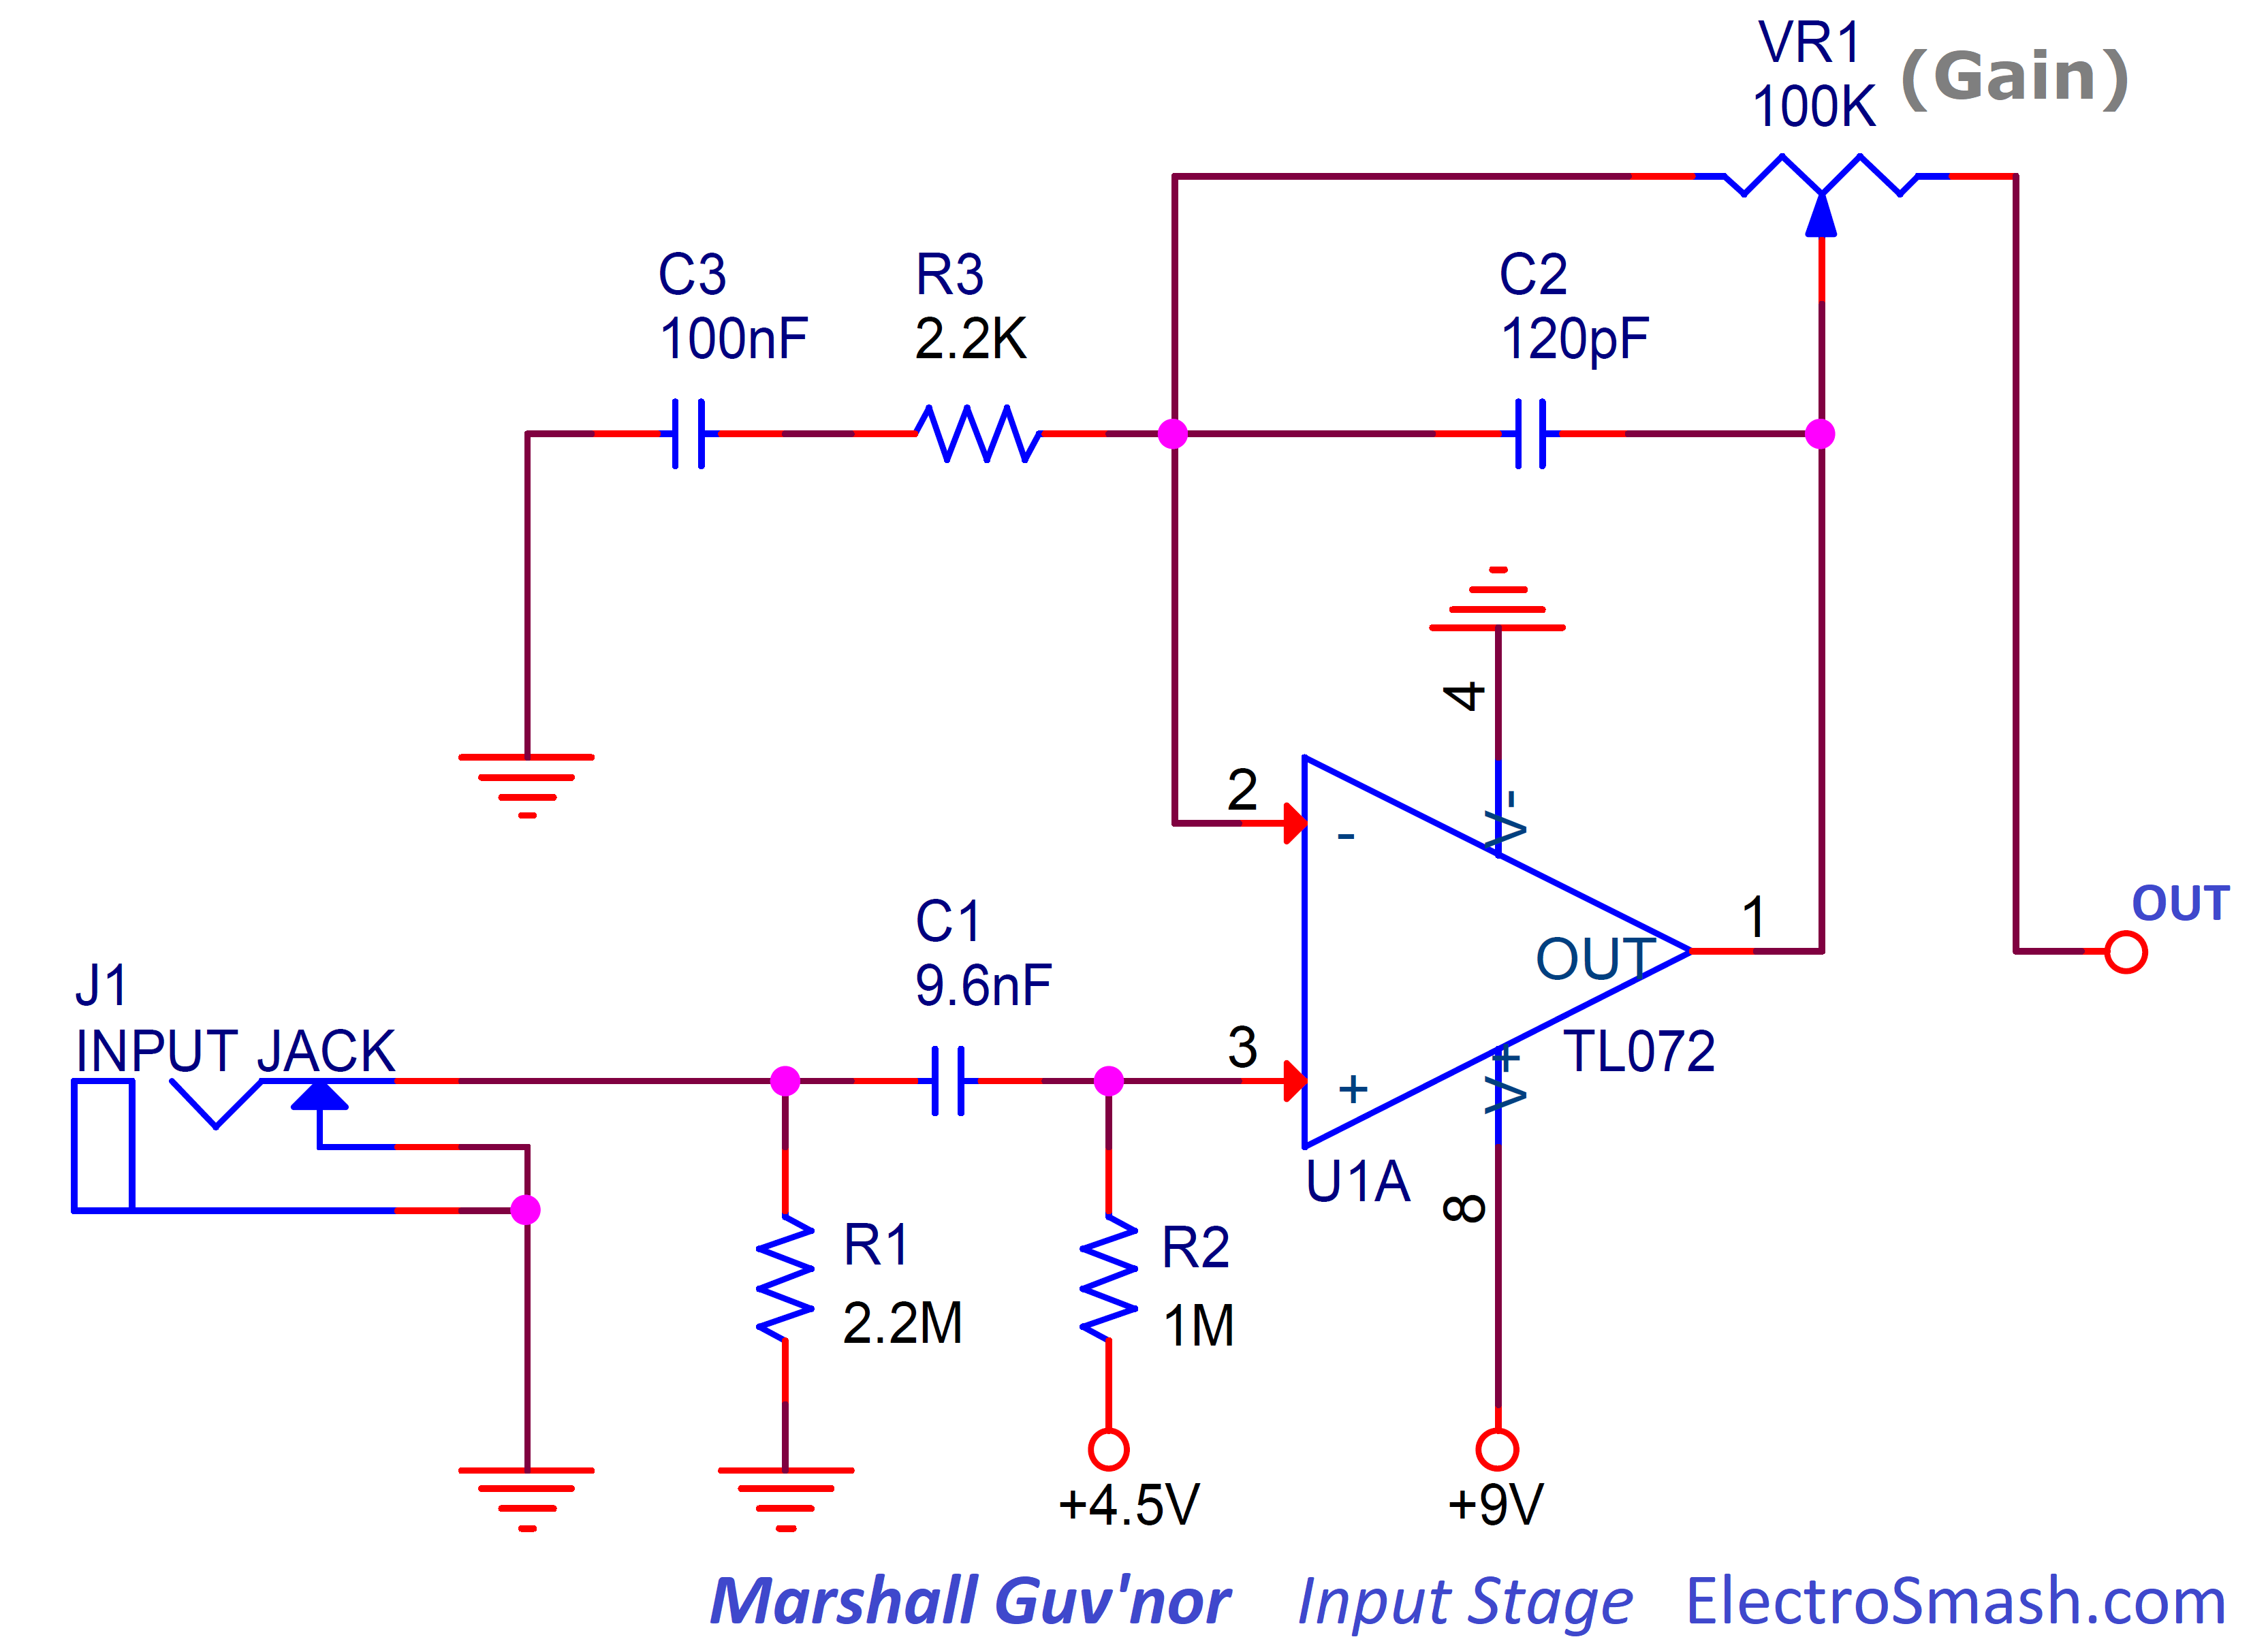 marshall guvnor input stage circuit